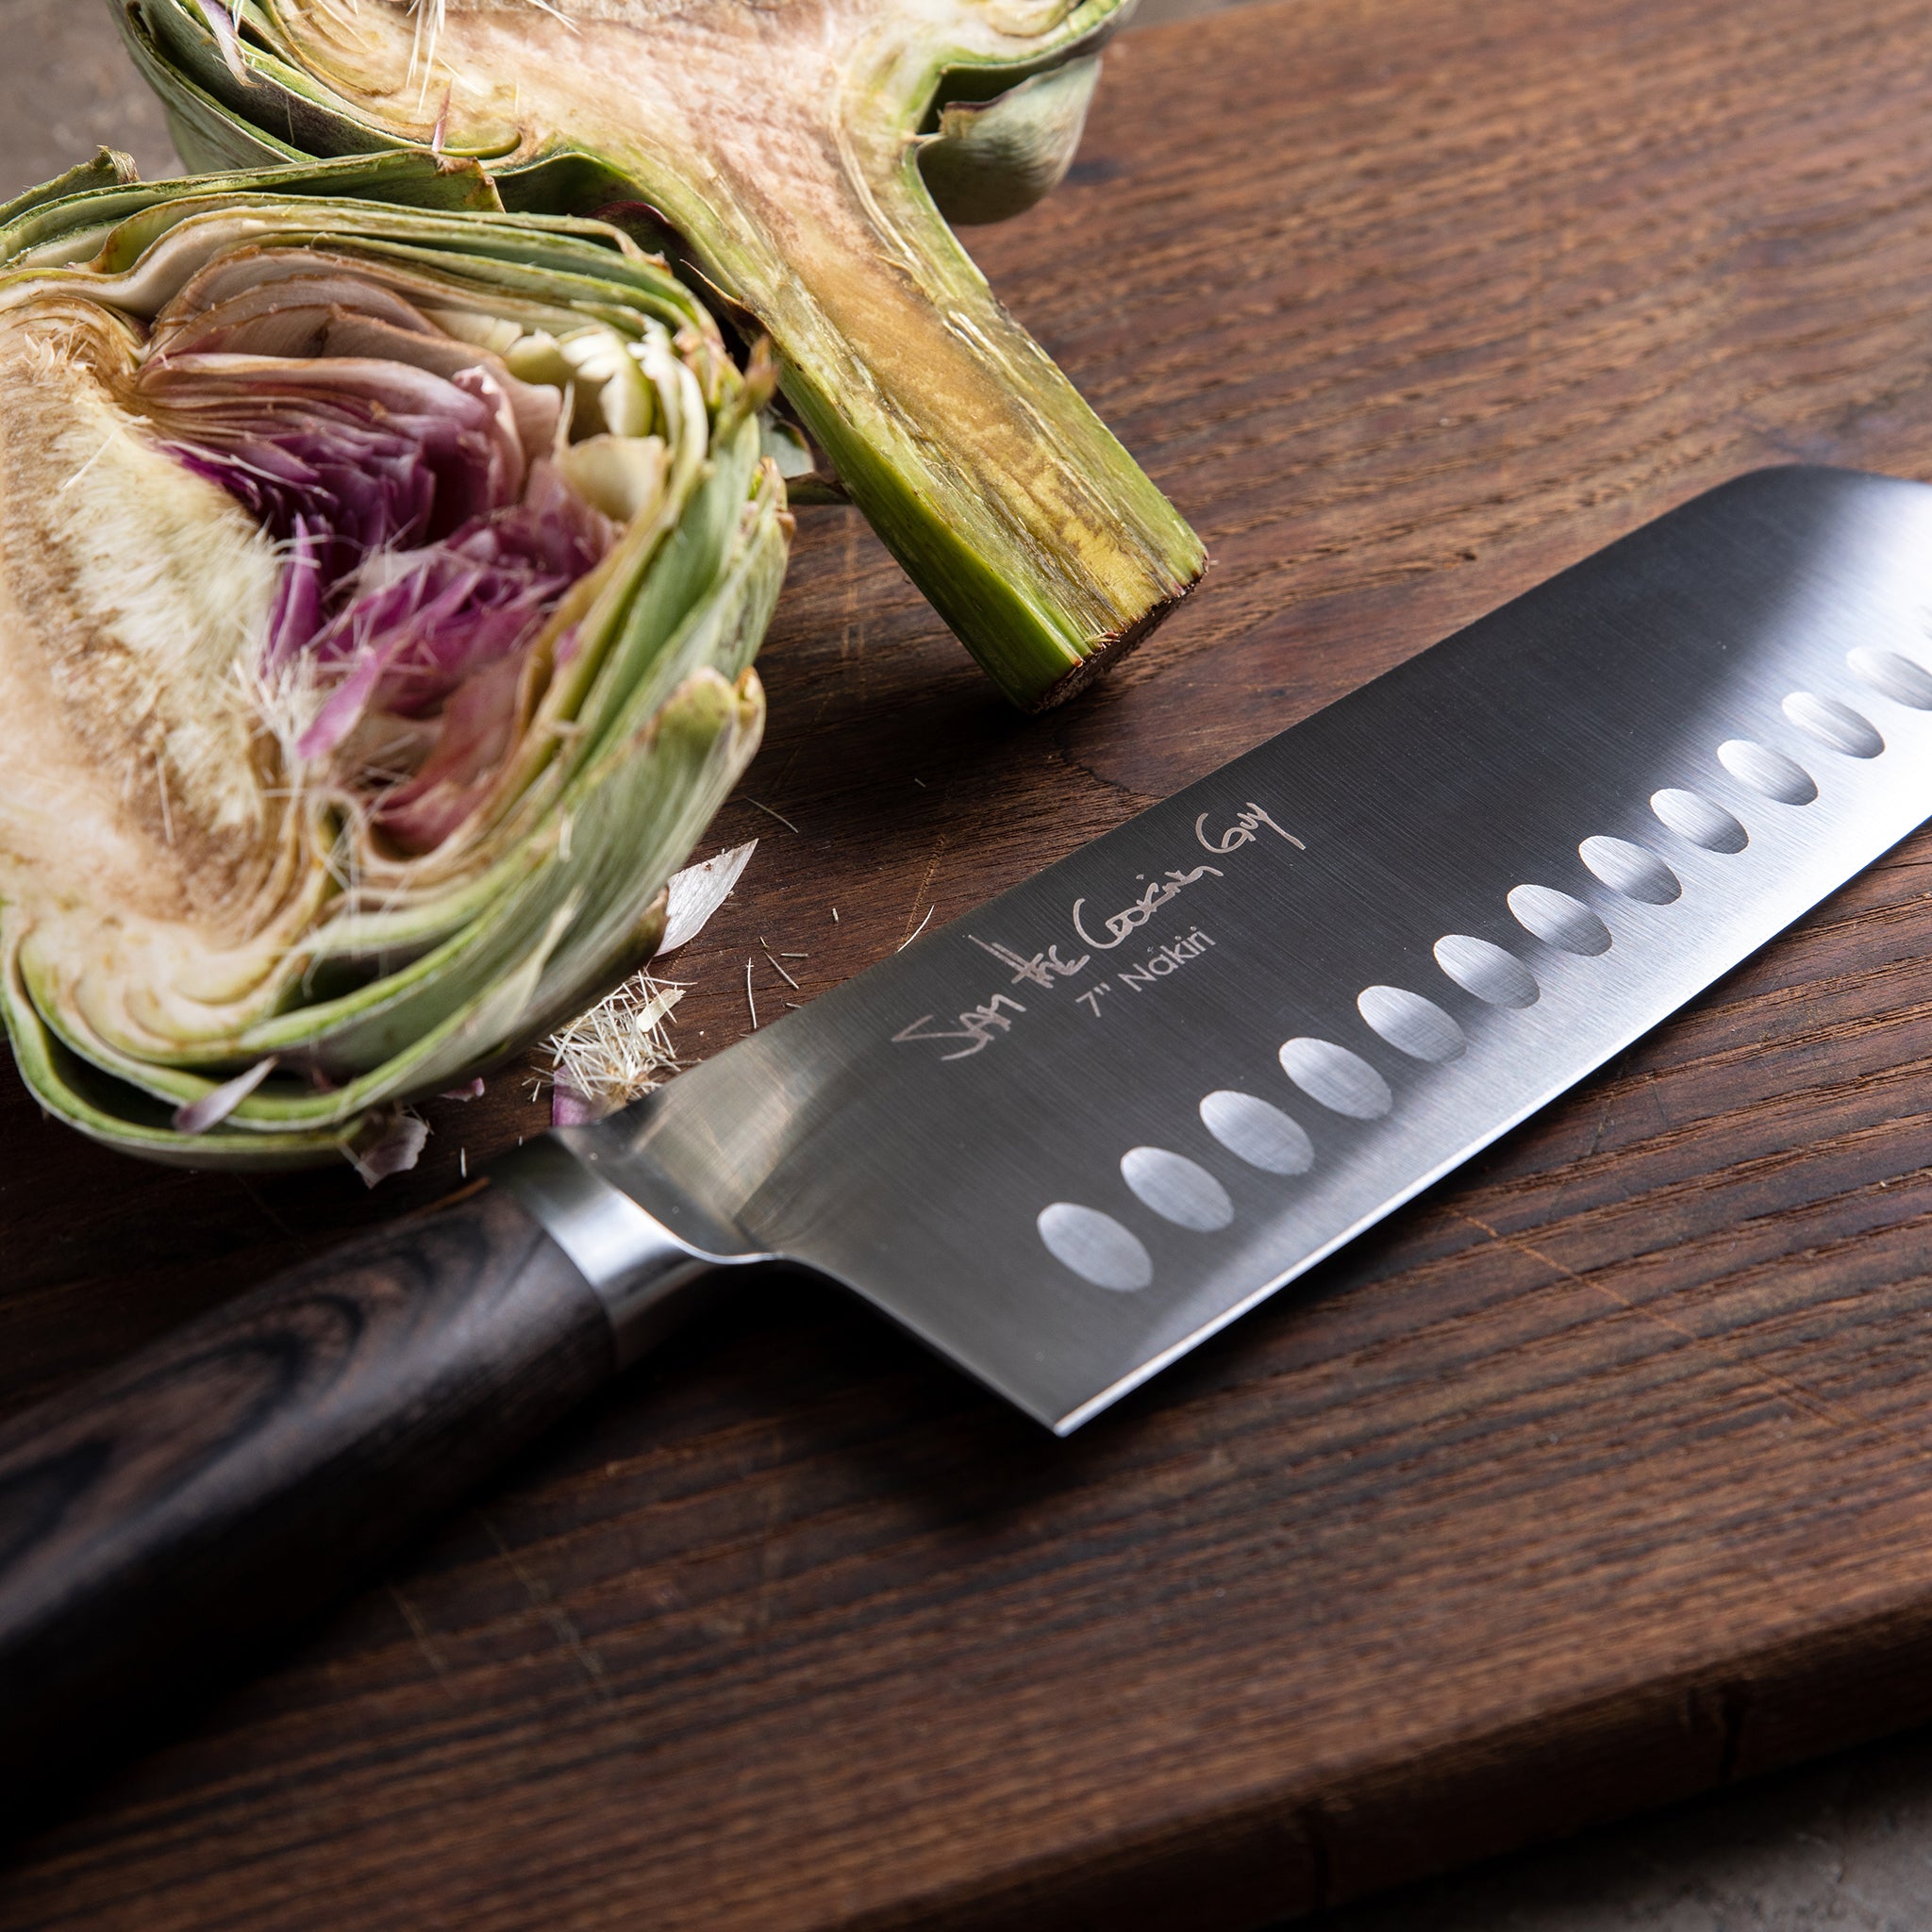 Sam the Cooking Guy Nakiri seems pretty overpriced : r/knives